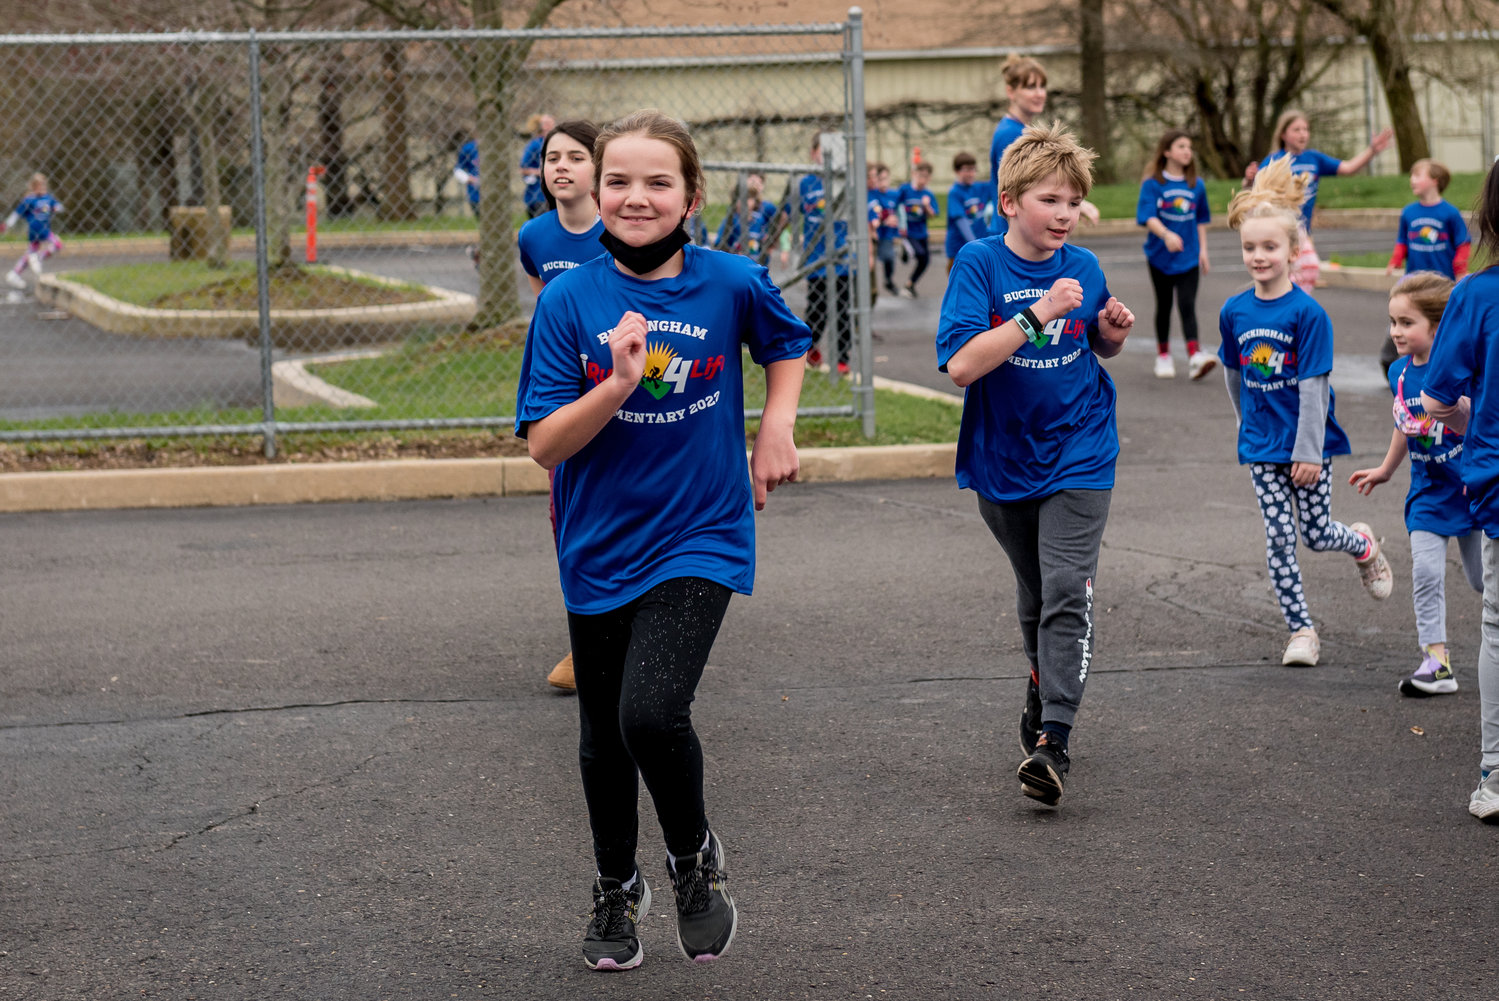 IRun4Life participants run laps around Buckingham Elementary.